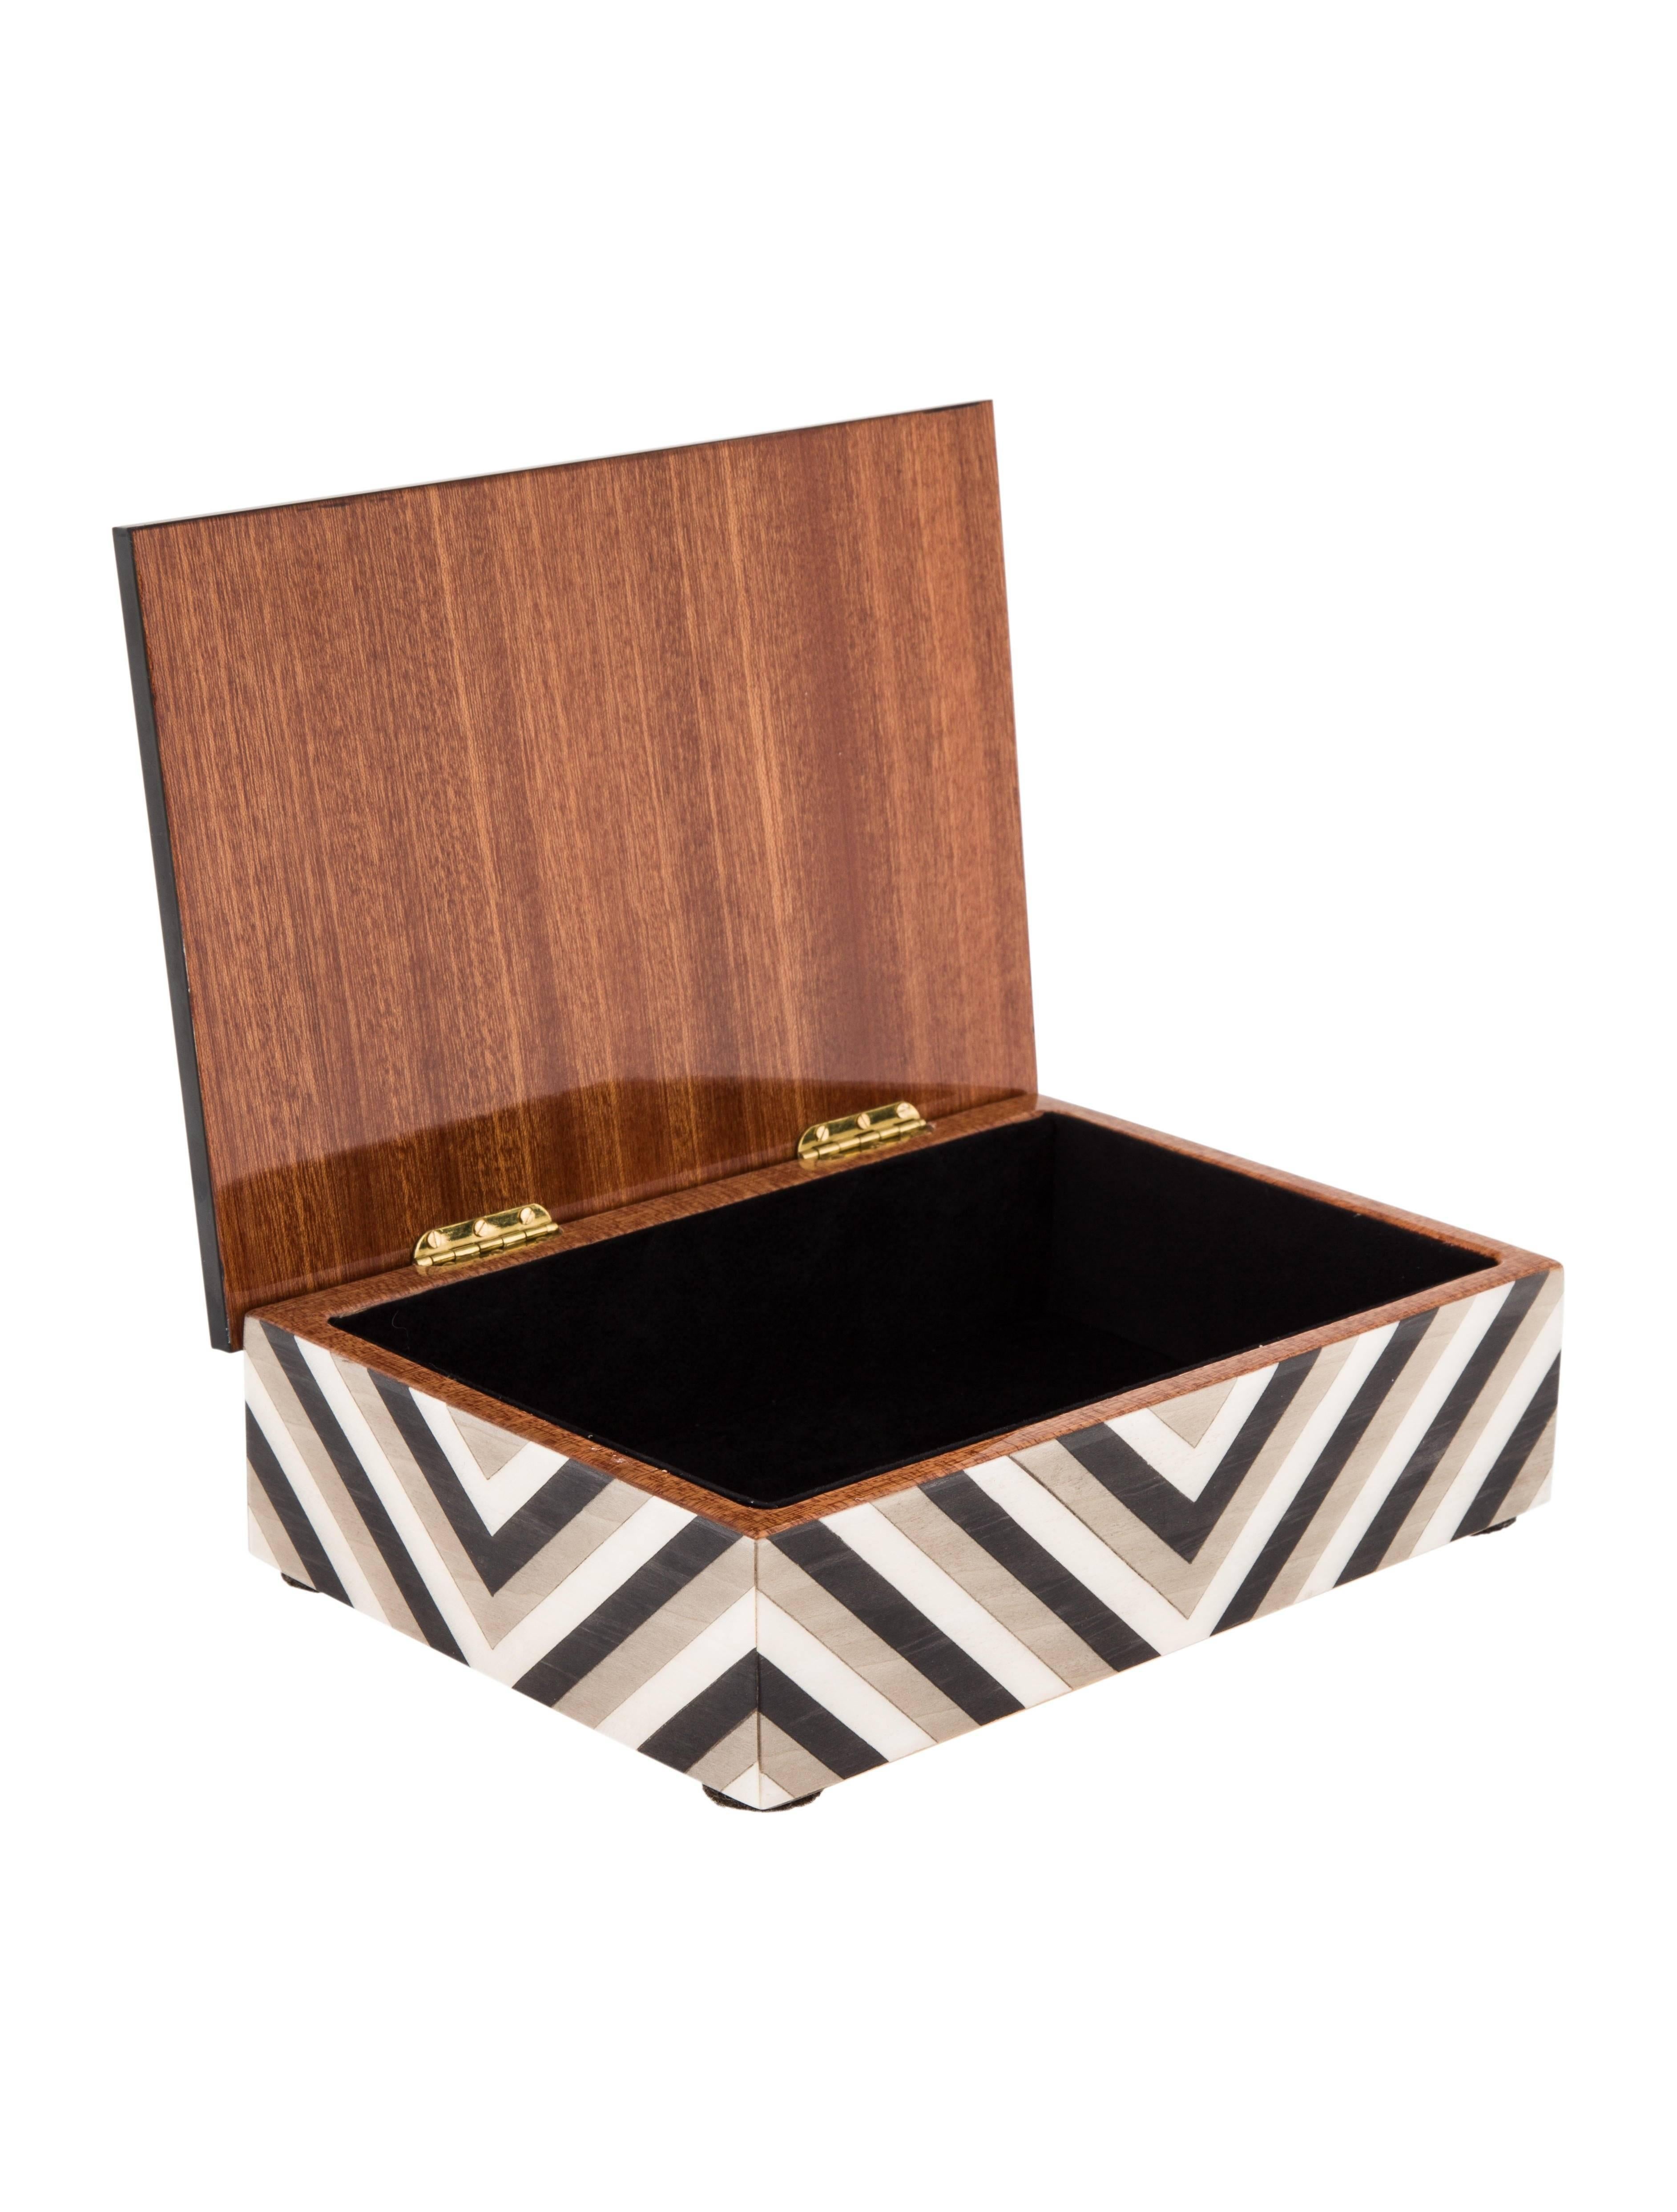 CURATOR'S NOTES

Dior Wood Veneer Black Brown Home Decorative Jewelry Vanity Cigar Table Desk Box  

Wood
Veneer
Lined interior 
Flip top
Gold tone hinges
Signed
Measures 5.25" W x 7.25" L x 2.25" D  